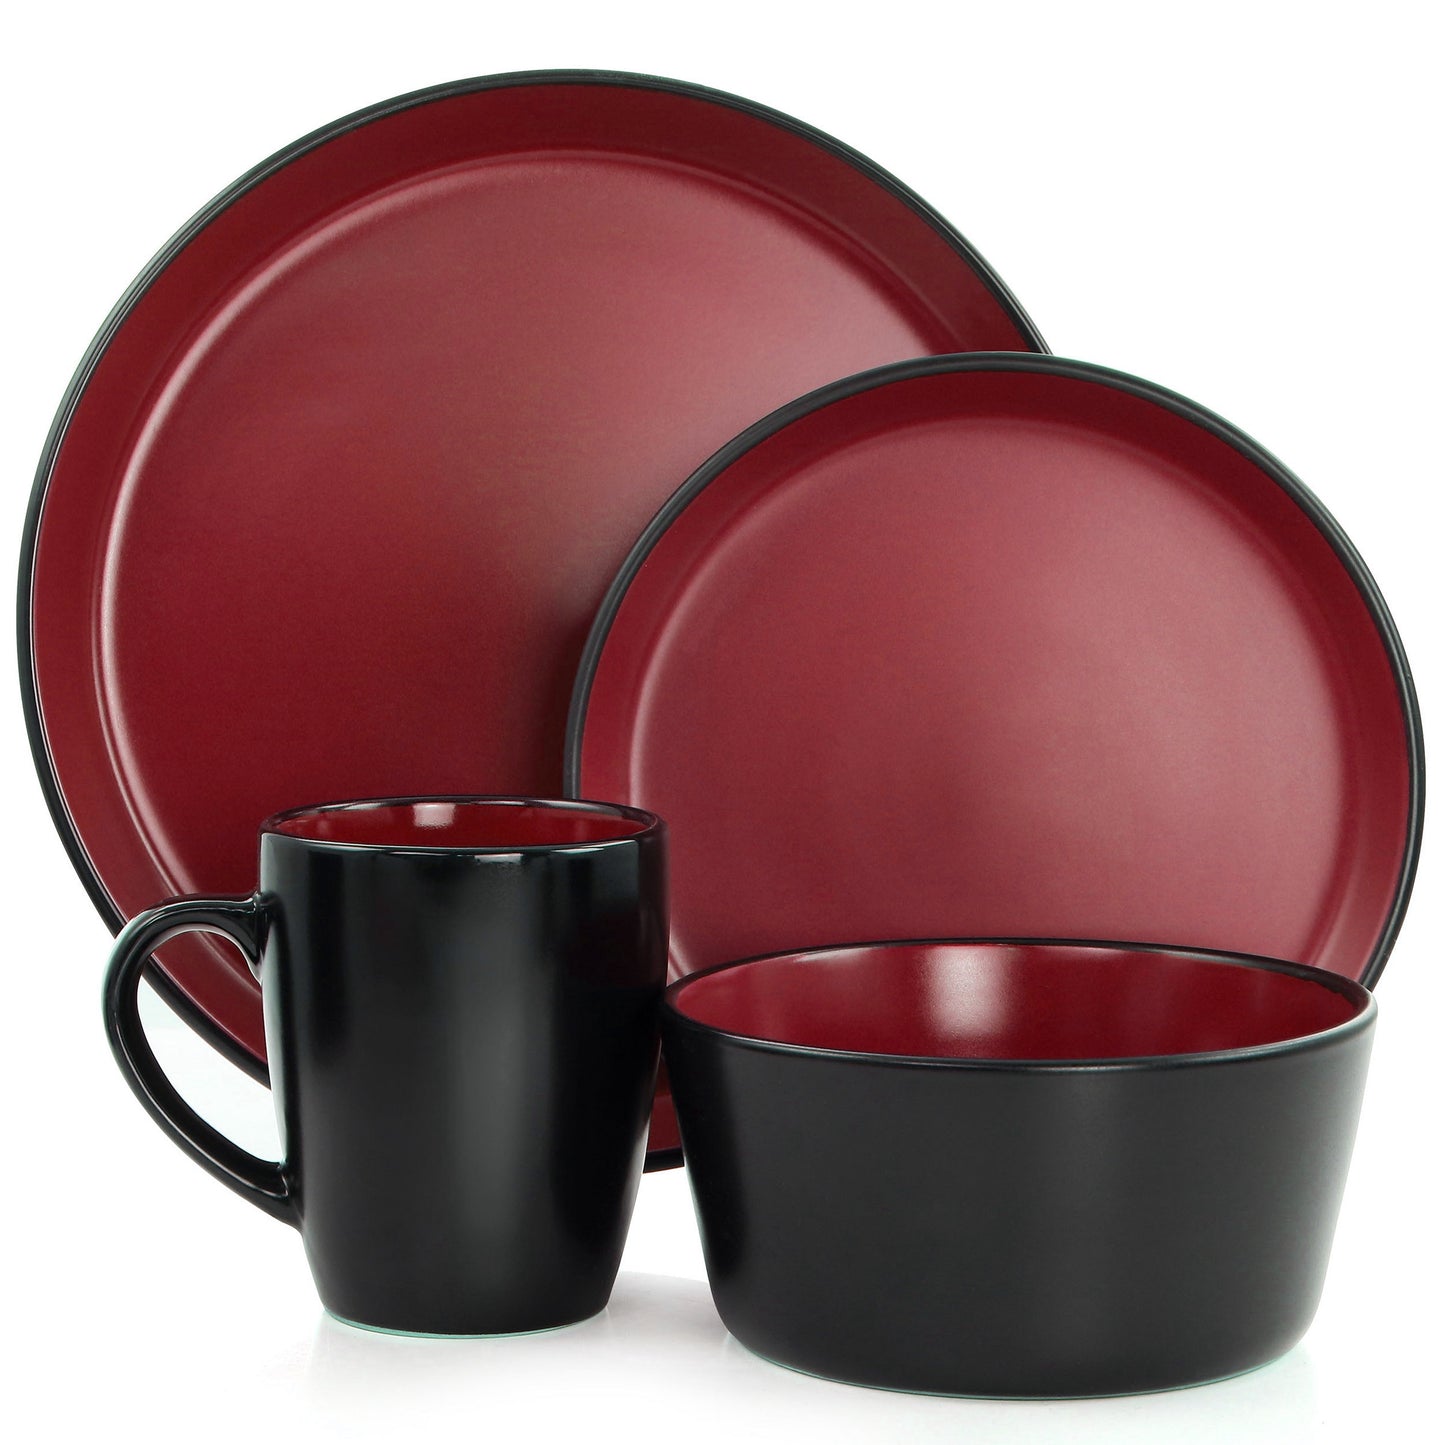 Laramie Blue Stoneware 16 Piece Dinnerware Set in Red and Black